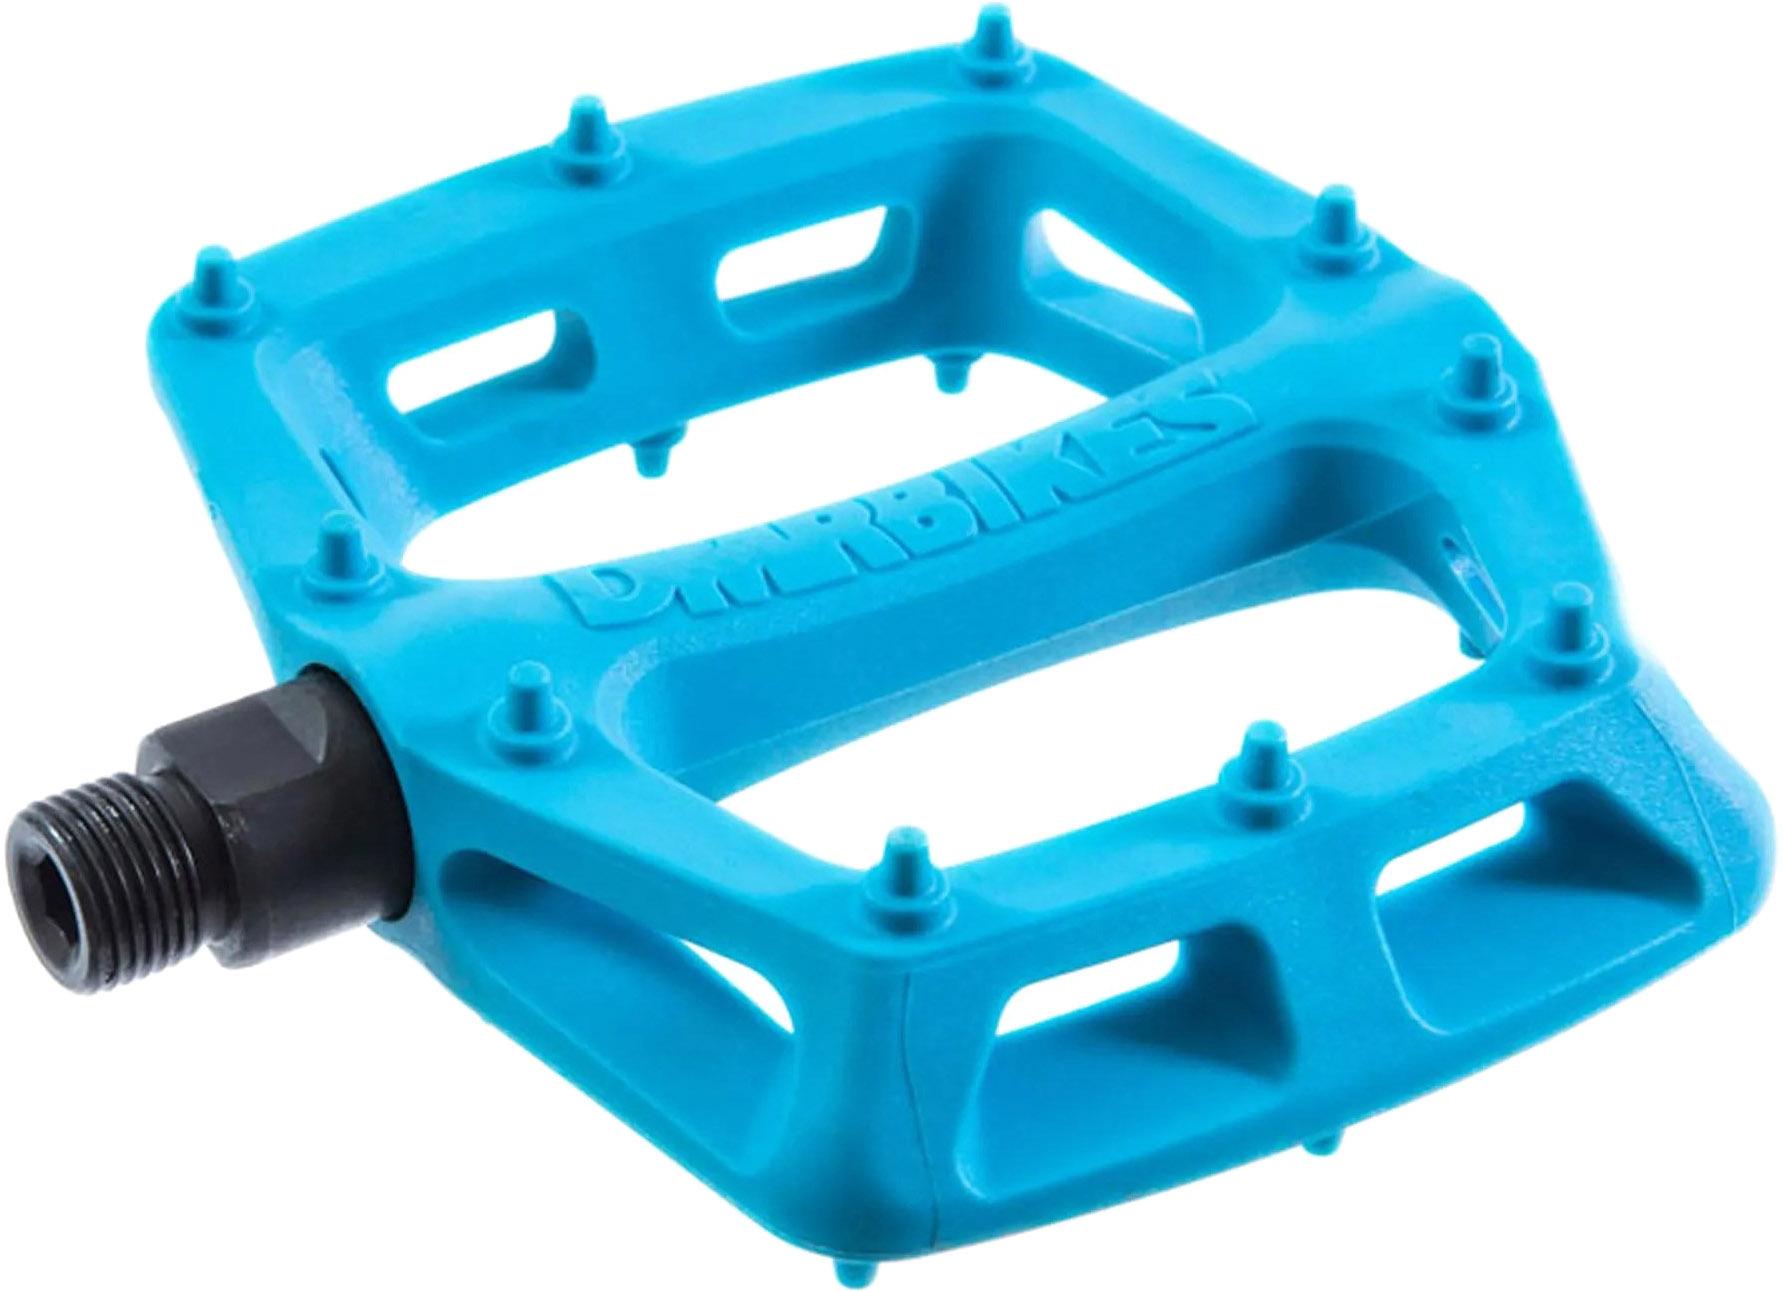 Dmr V6 Plastic Flat Pedals - Blue